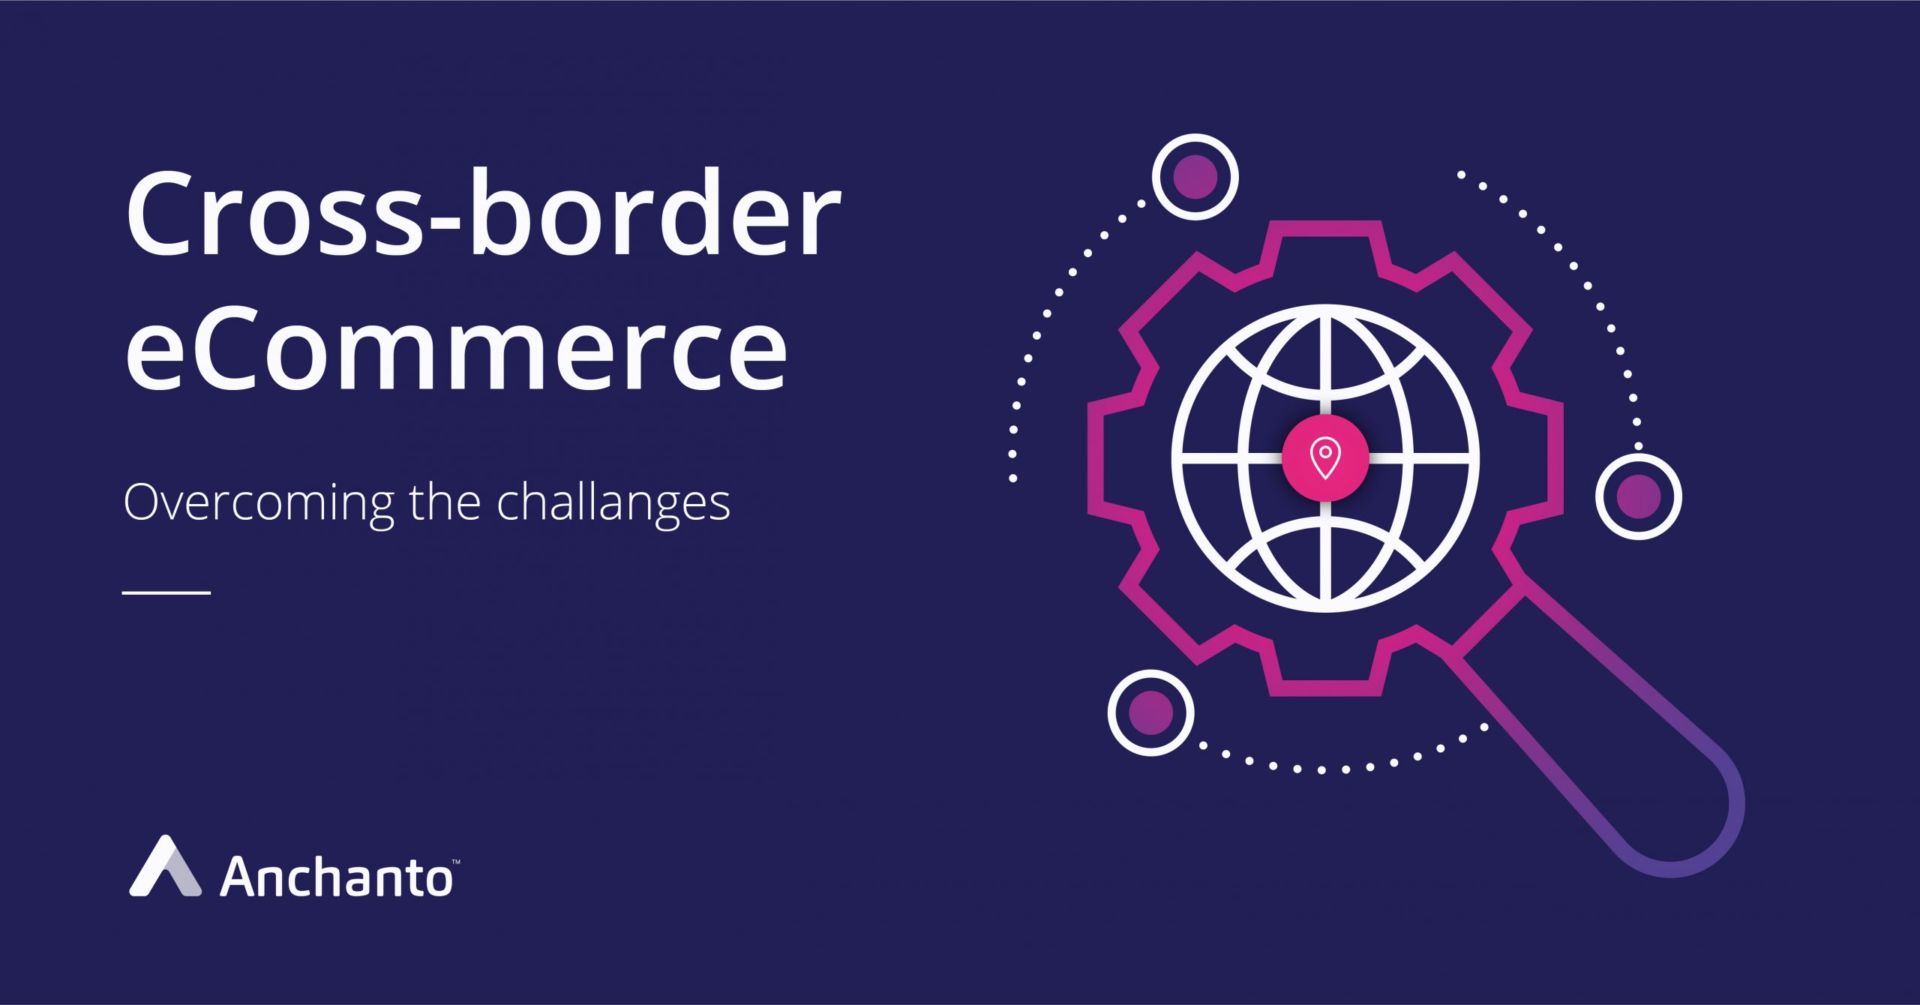 Overcoming challenges of cross-border e-commerce